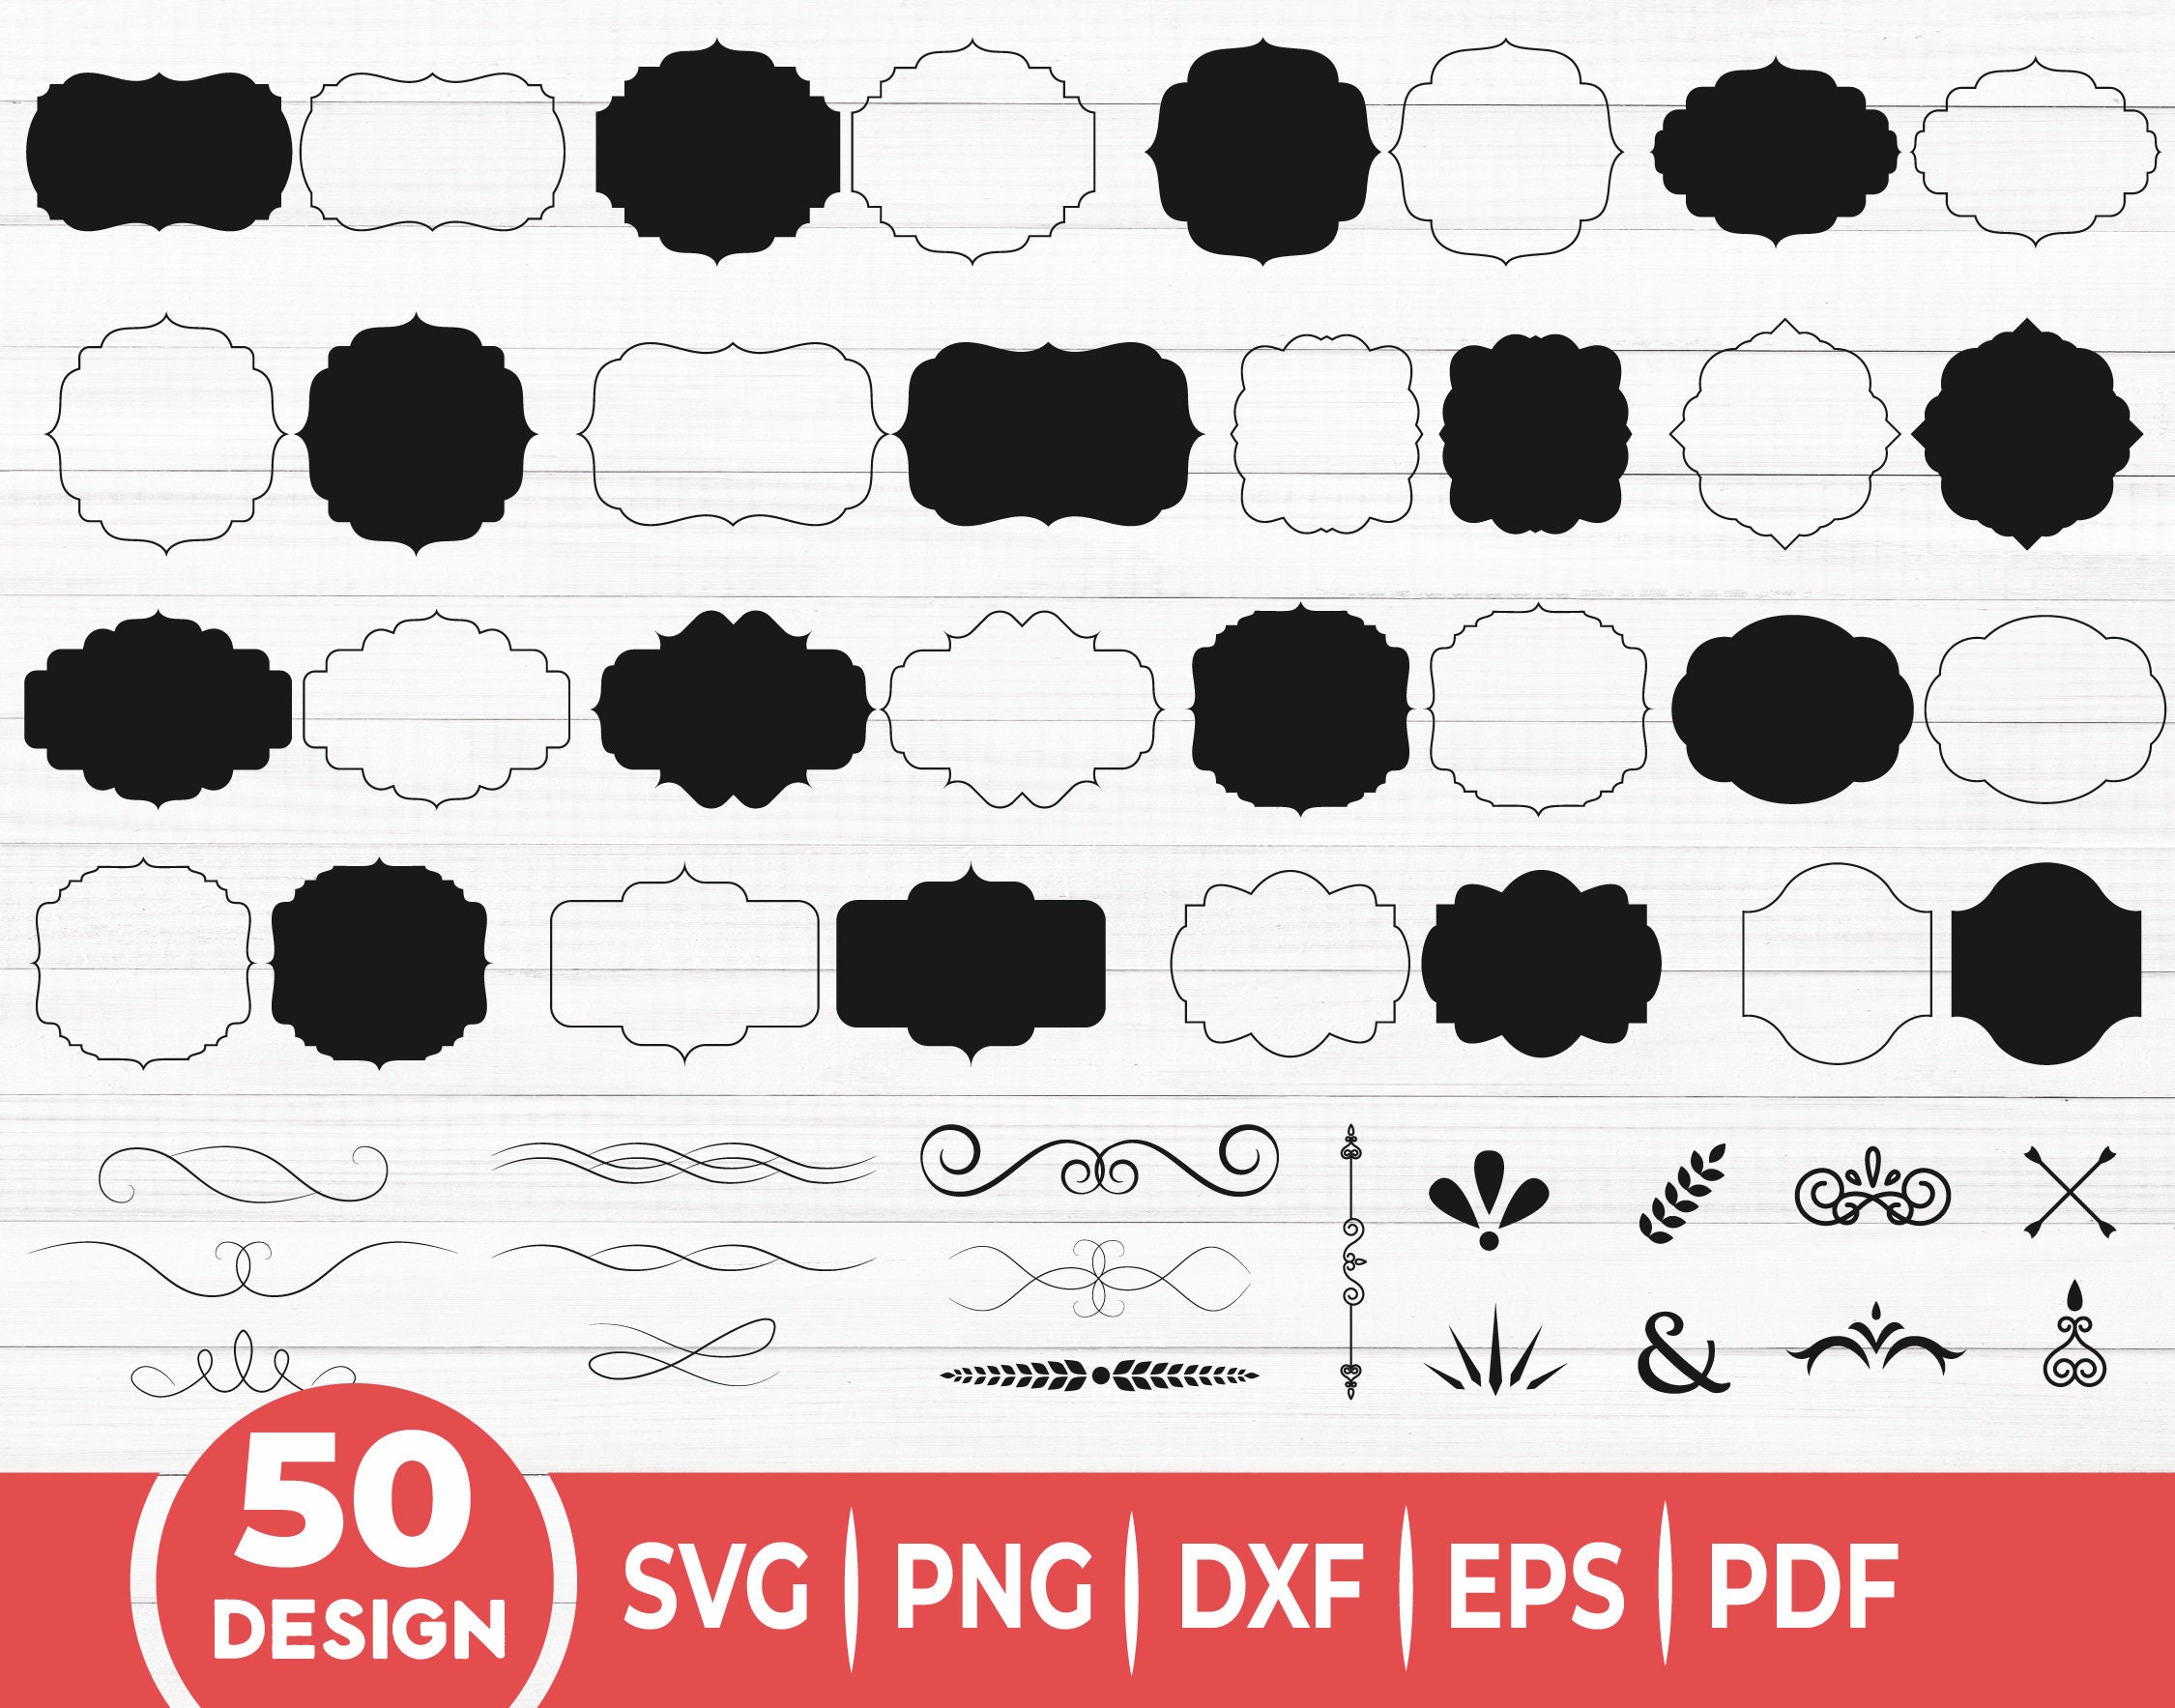 Blank Dog Tags vector illustration instant digital download, ai, eps, pdf,  svg, png and jpg